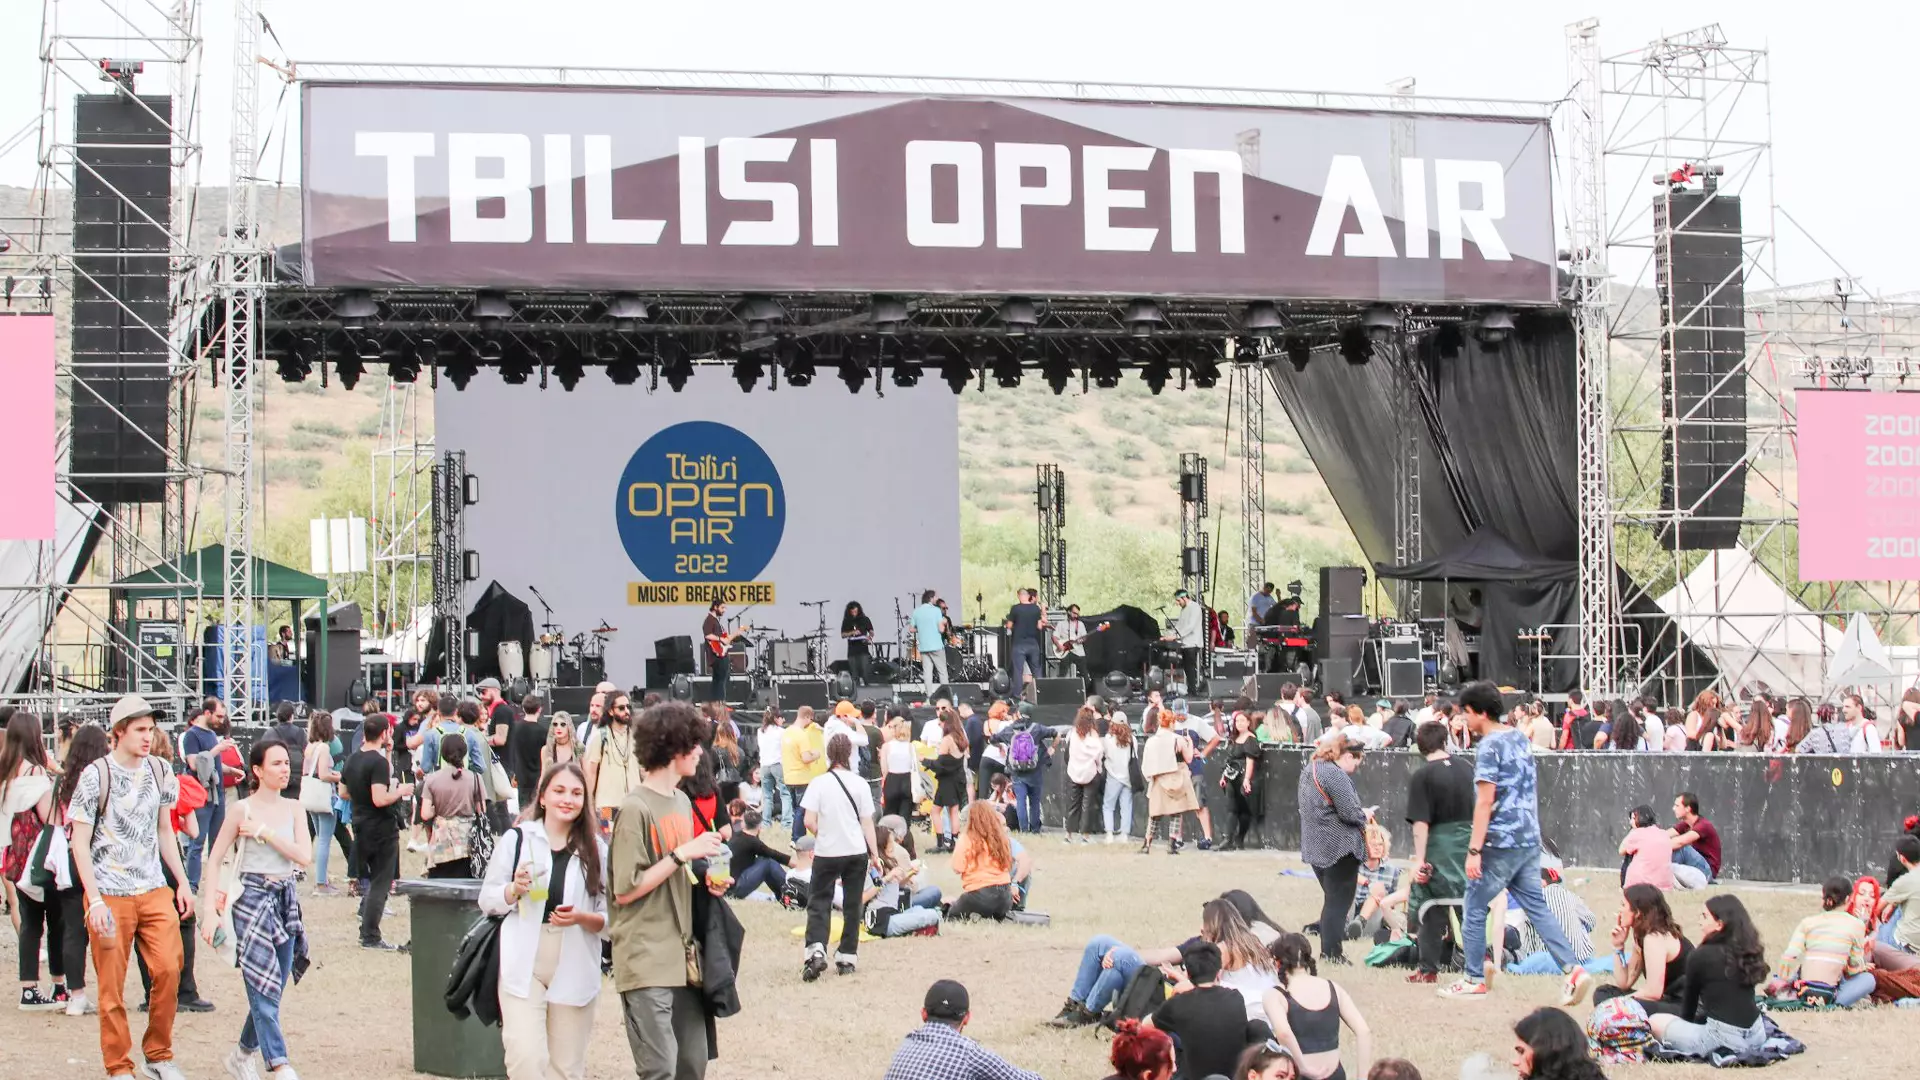 Tbilisi Open Air Festival